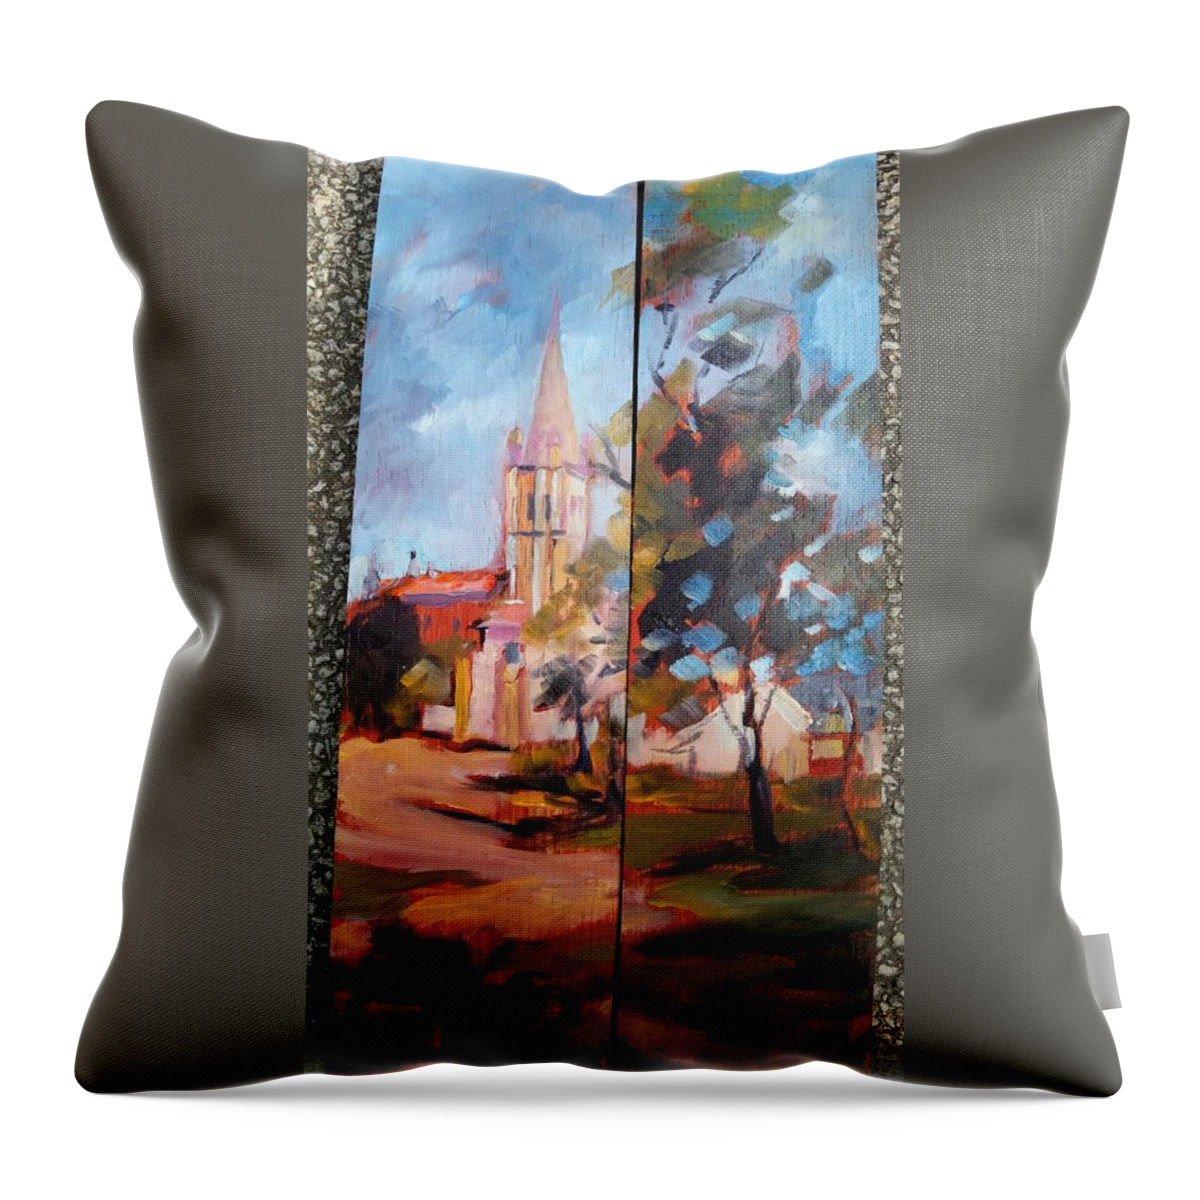  Throw Pillow featuring the painting Gensac la palus 16 by Kim PARDON